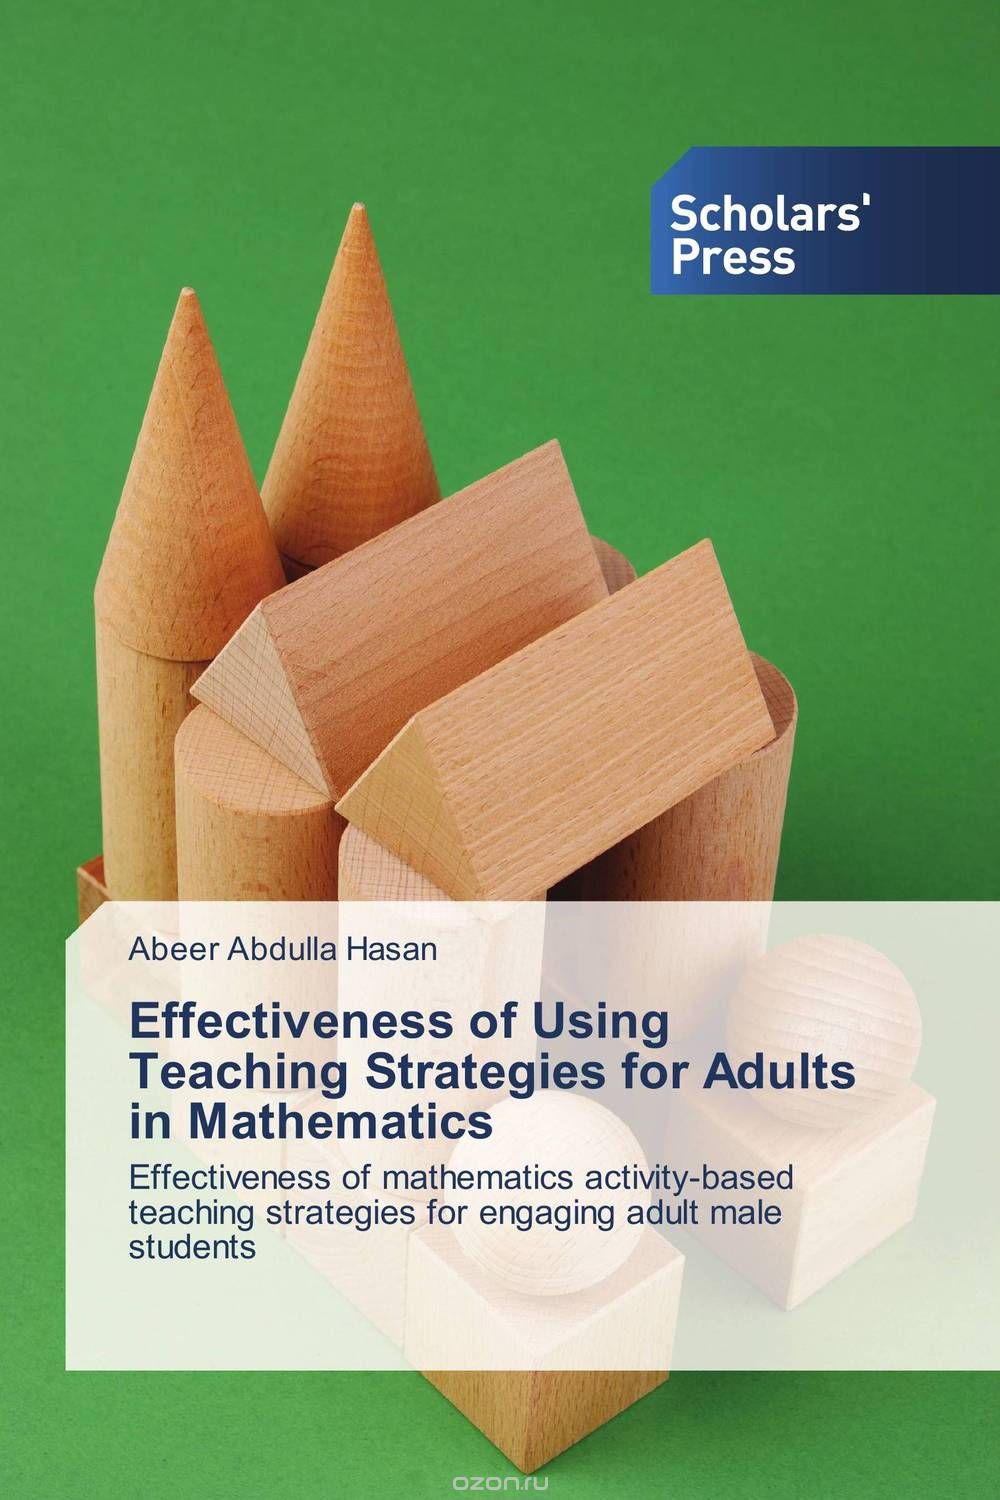 Скачать книгу "Effectiveness of Using Teaching Strategies for Adults in Mathematics"